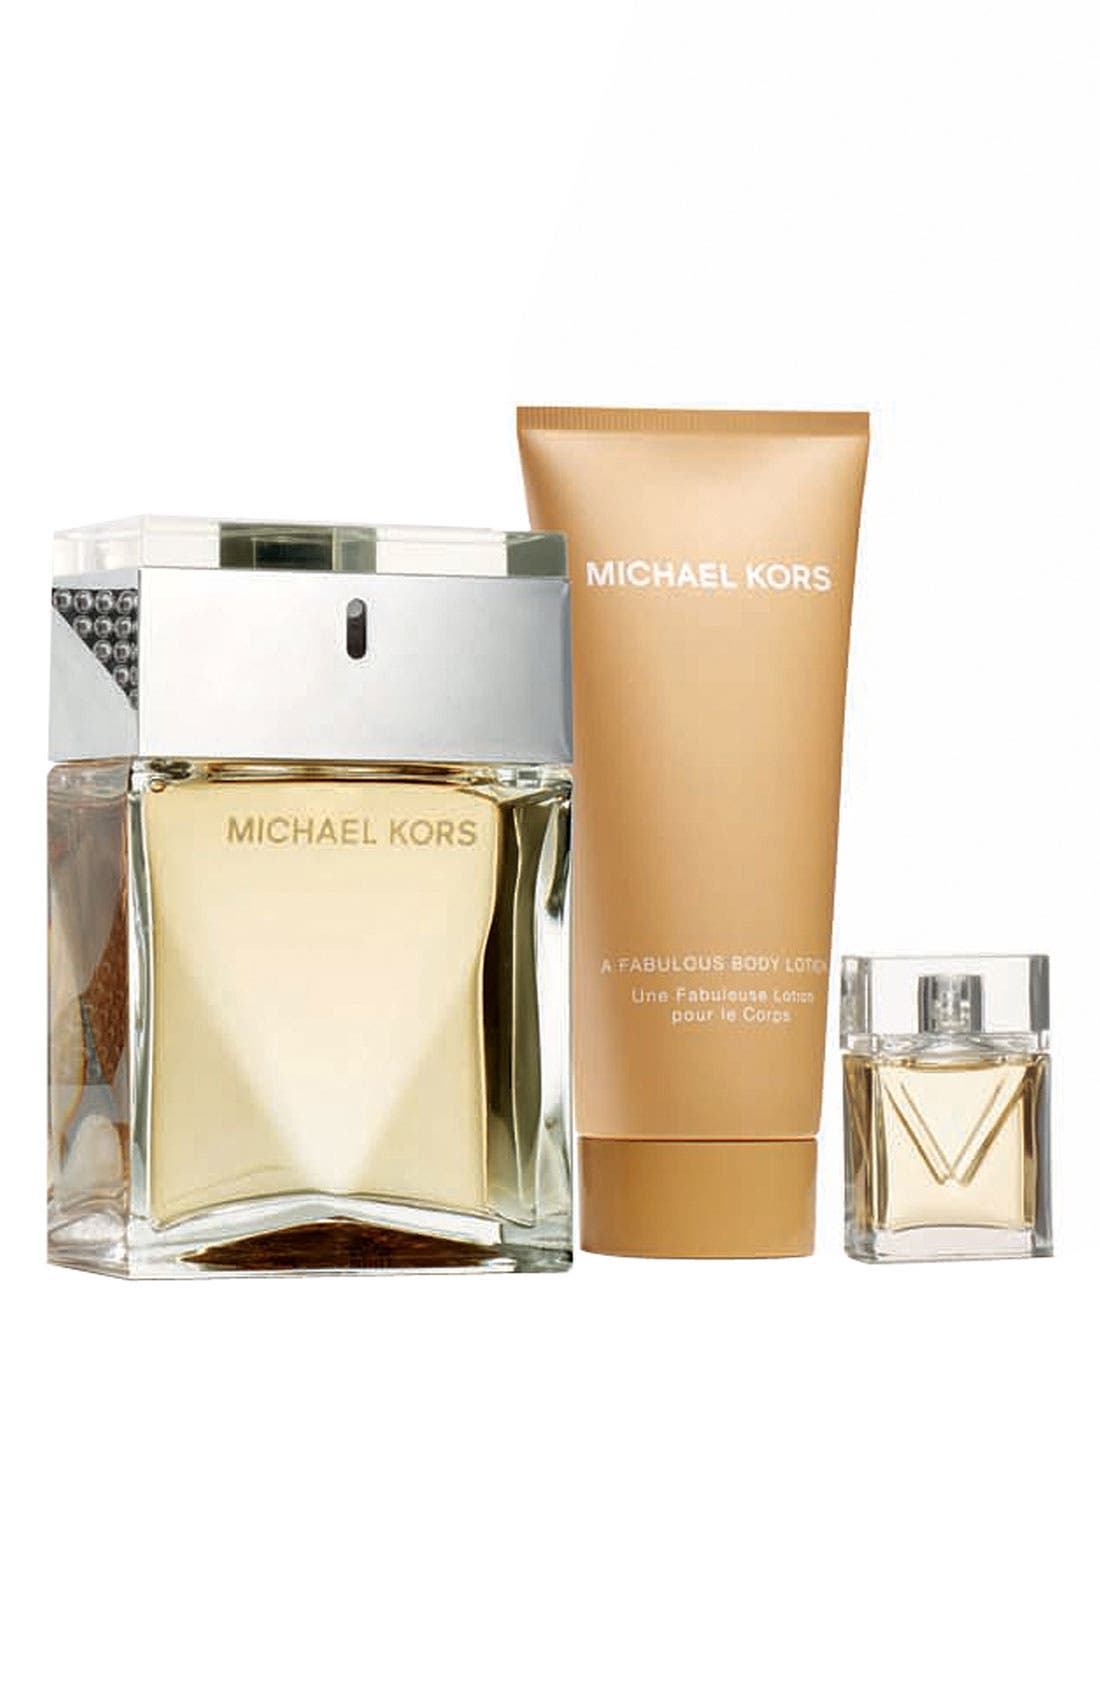 michael kors perfume gift box